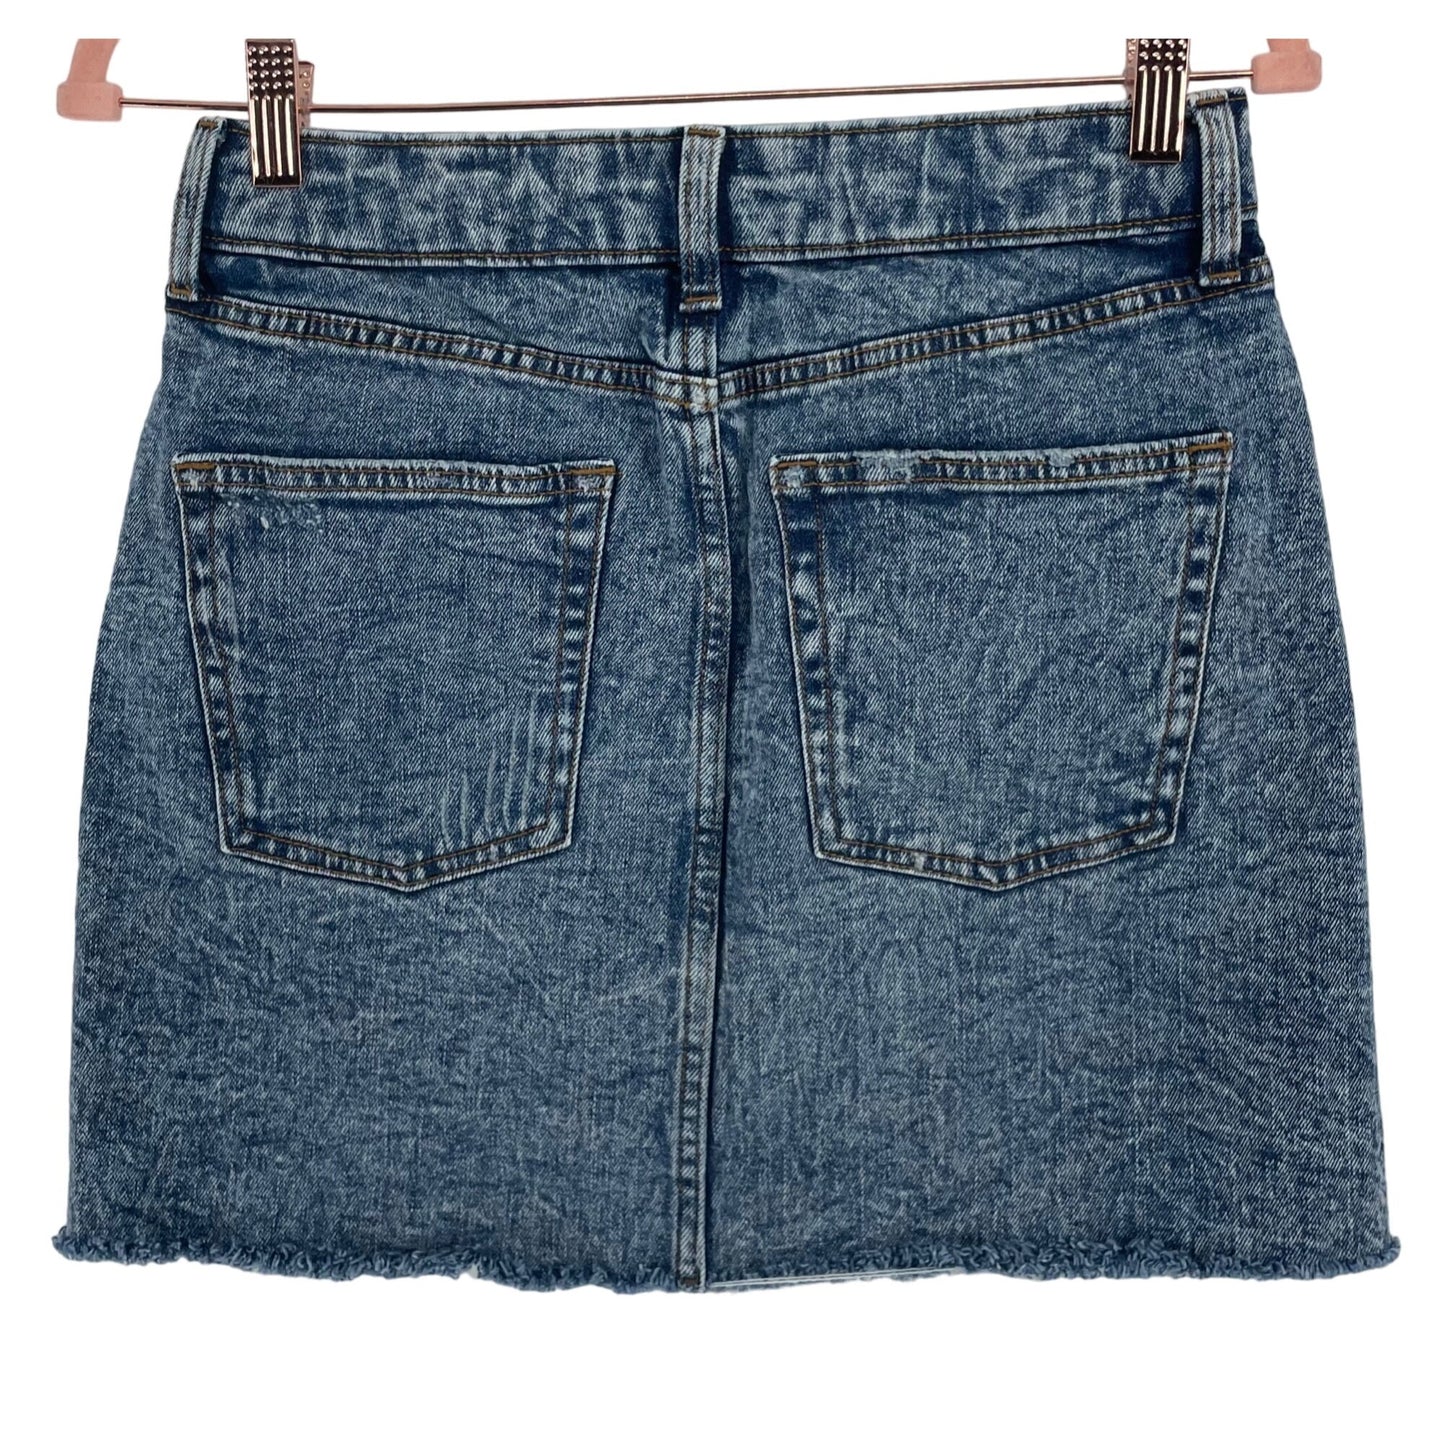 NWOT Wild Fable Women's Size 6 Blue Jean Denim Distressed Fringe Mini Skirt